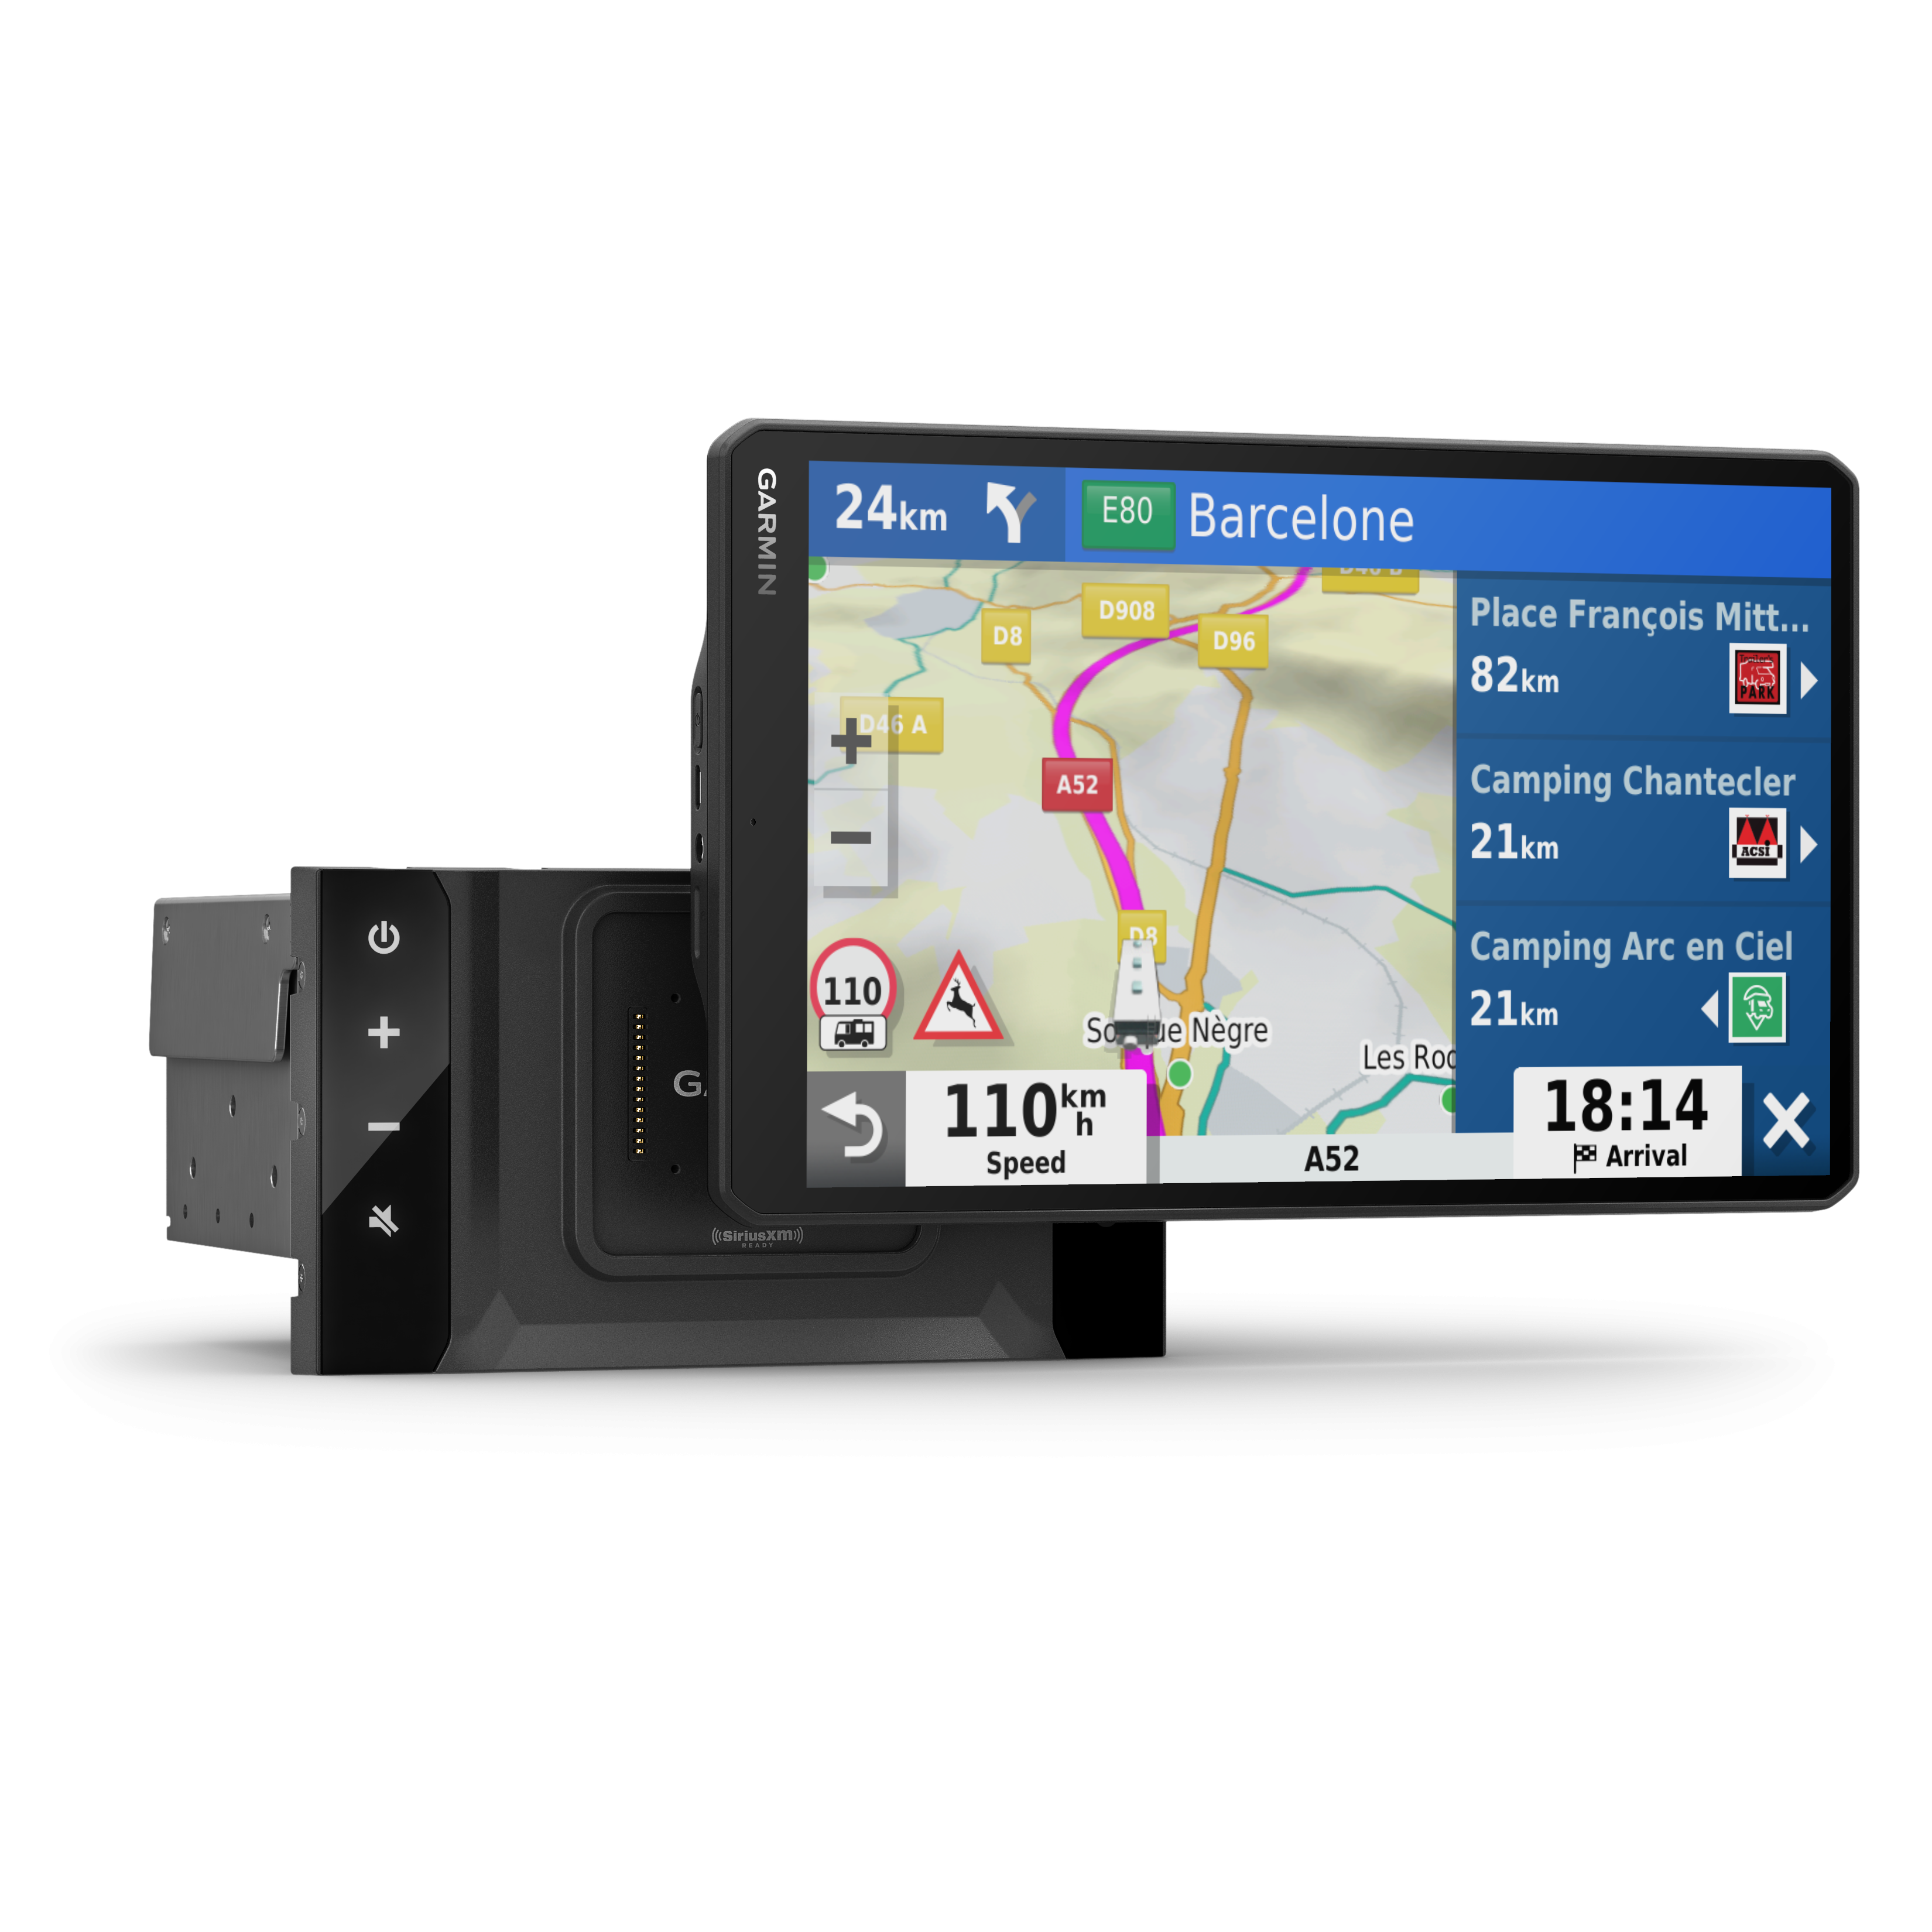 SYSTEME D'INFOTAINMENT ET GPS INTEGRES POUR CAMPING-CAR VIEO-GARMIN